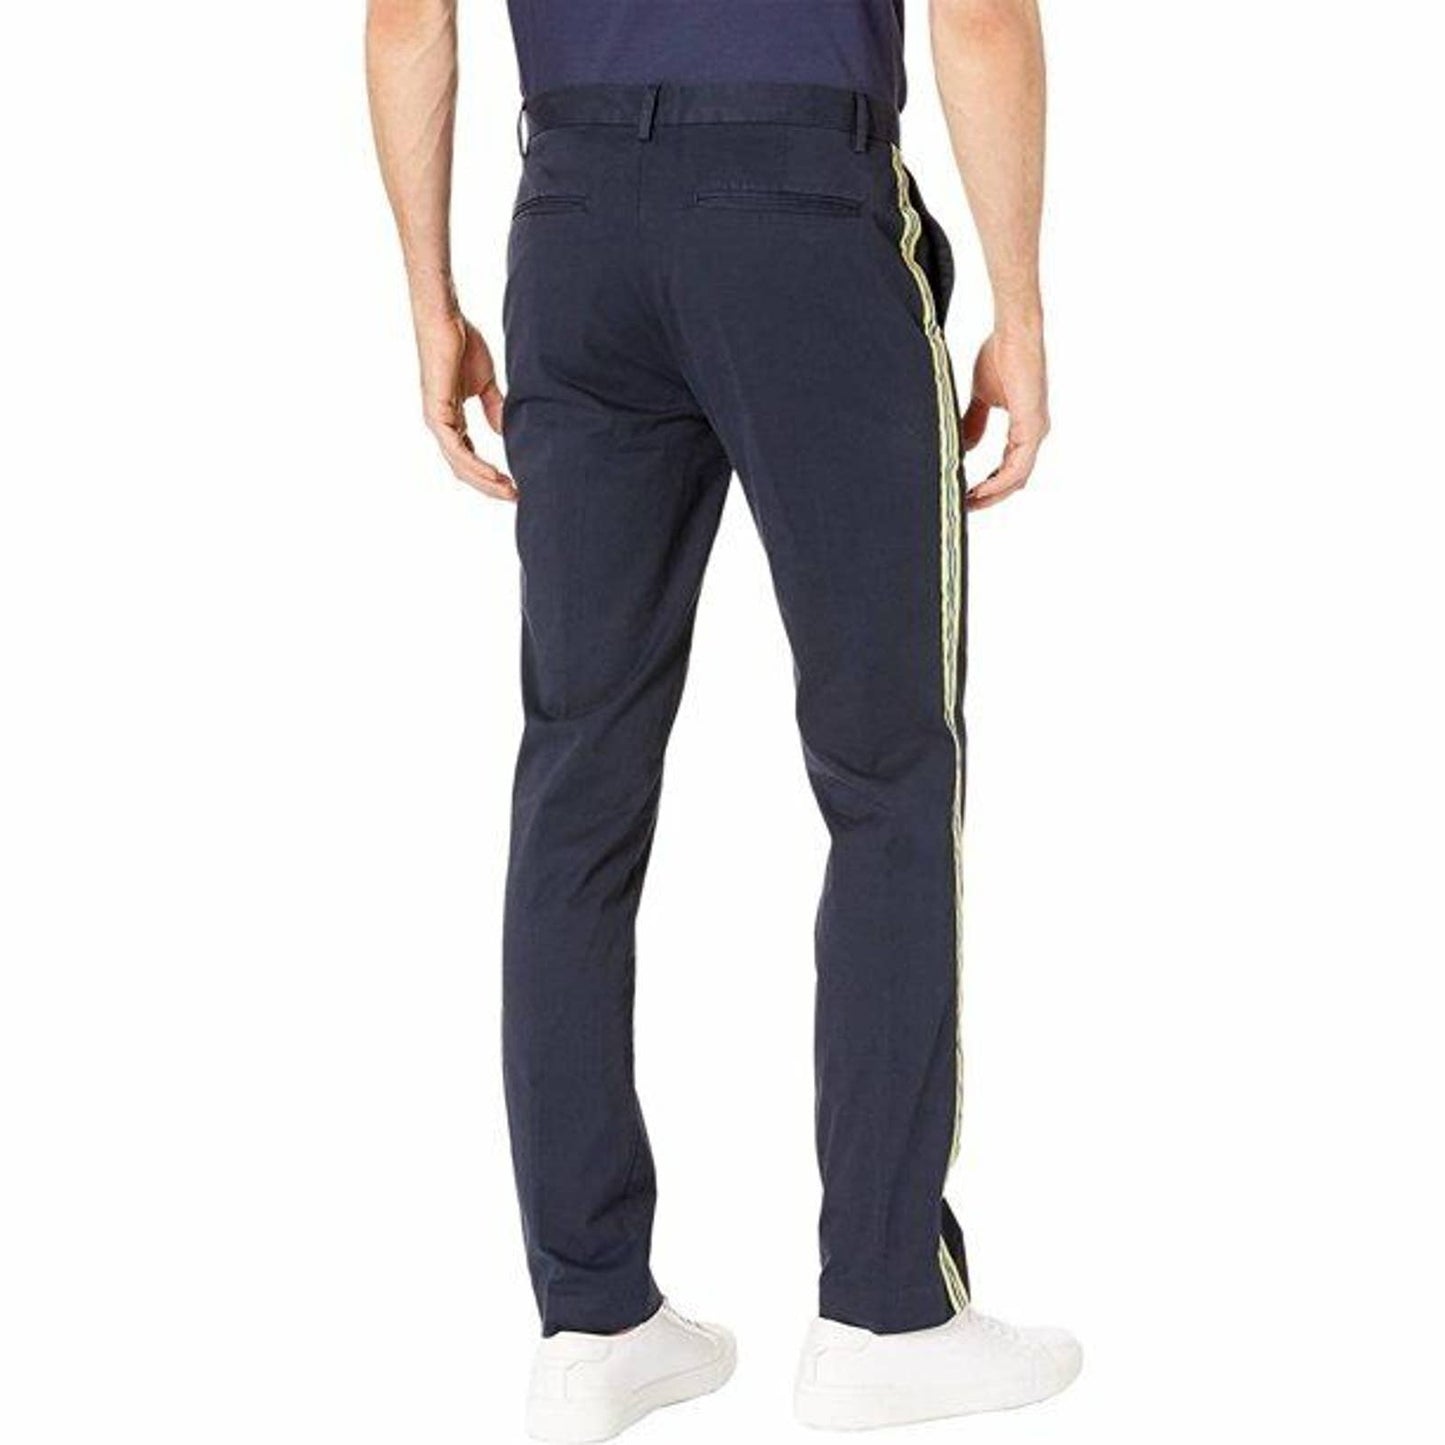 CALVIN KLEIN, Modern Collegiate Navy Blue & Yellow Sky Captain Pants, NWT $79.50